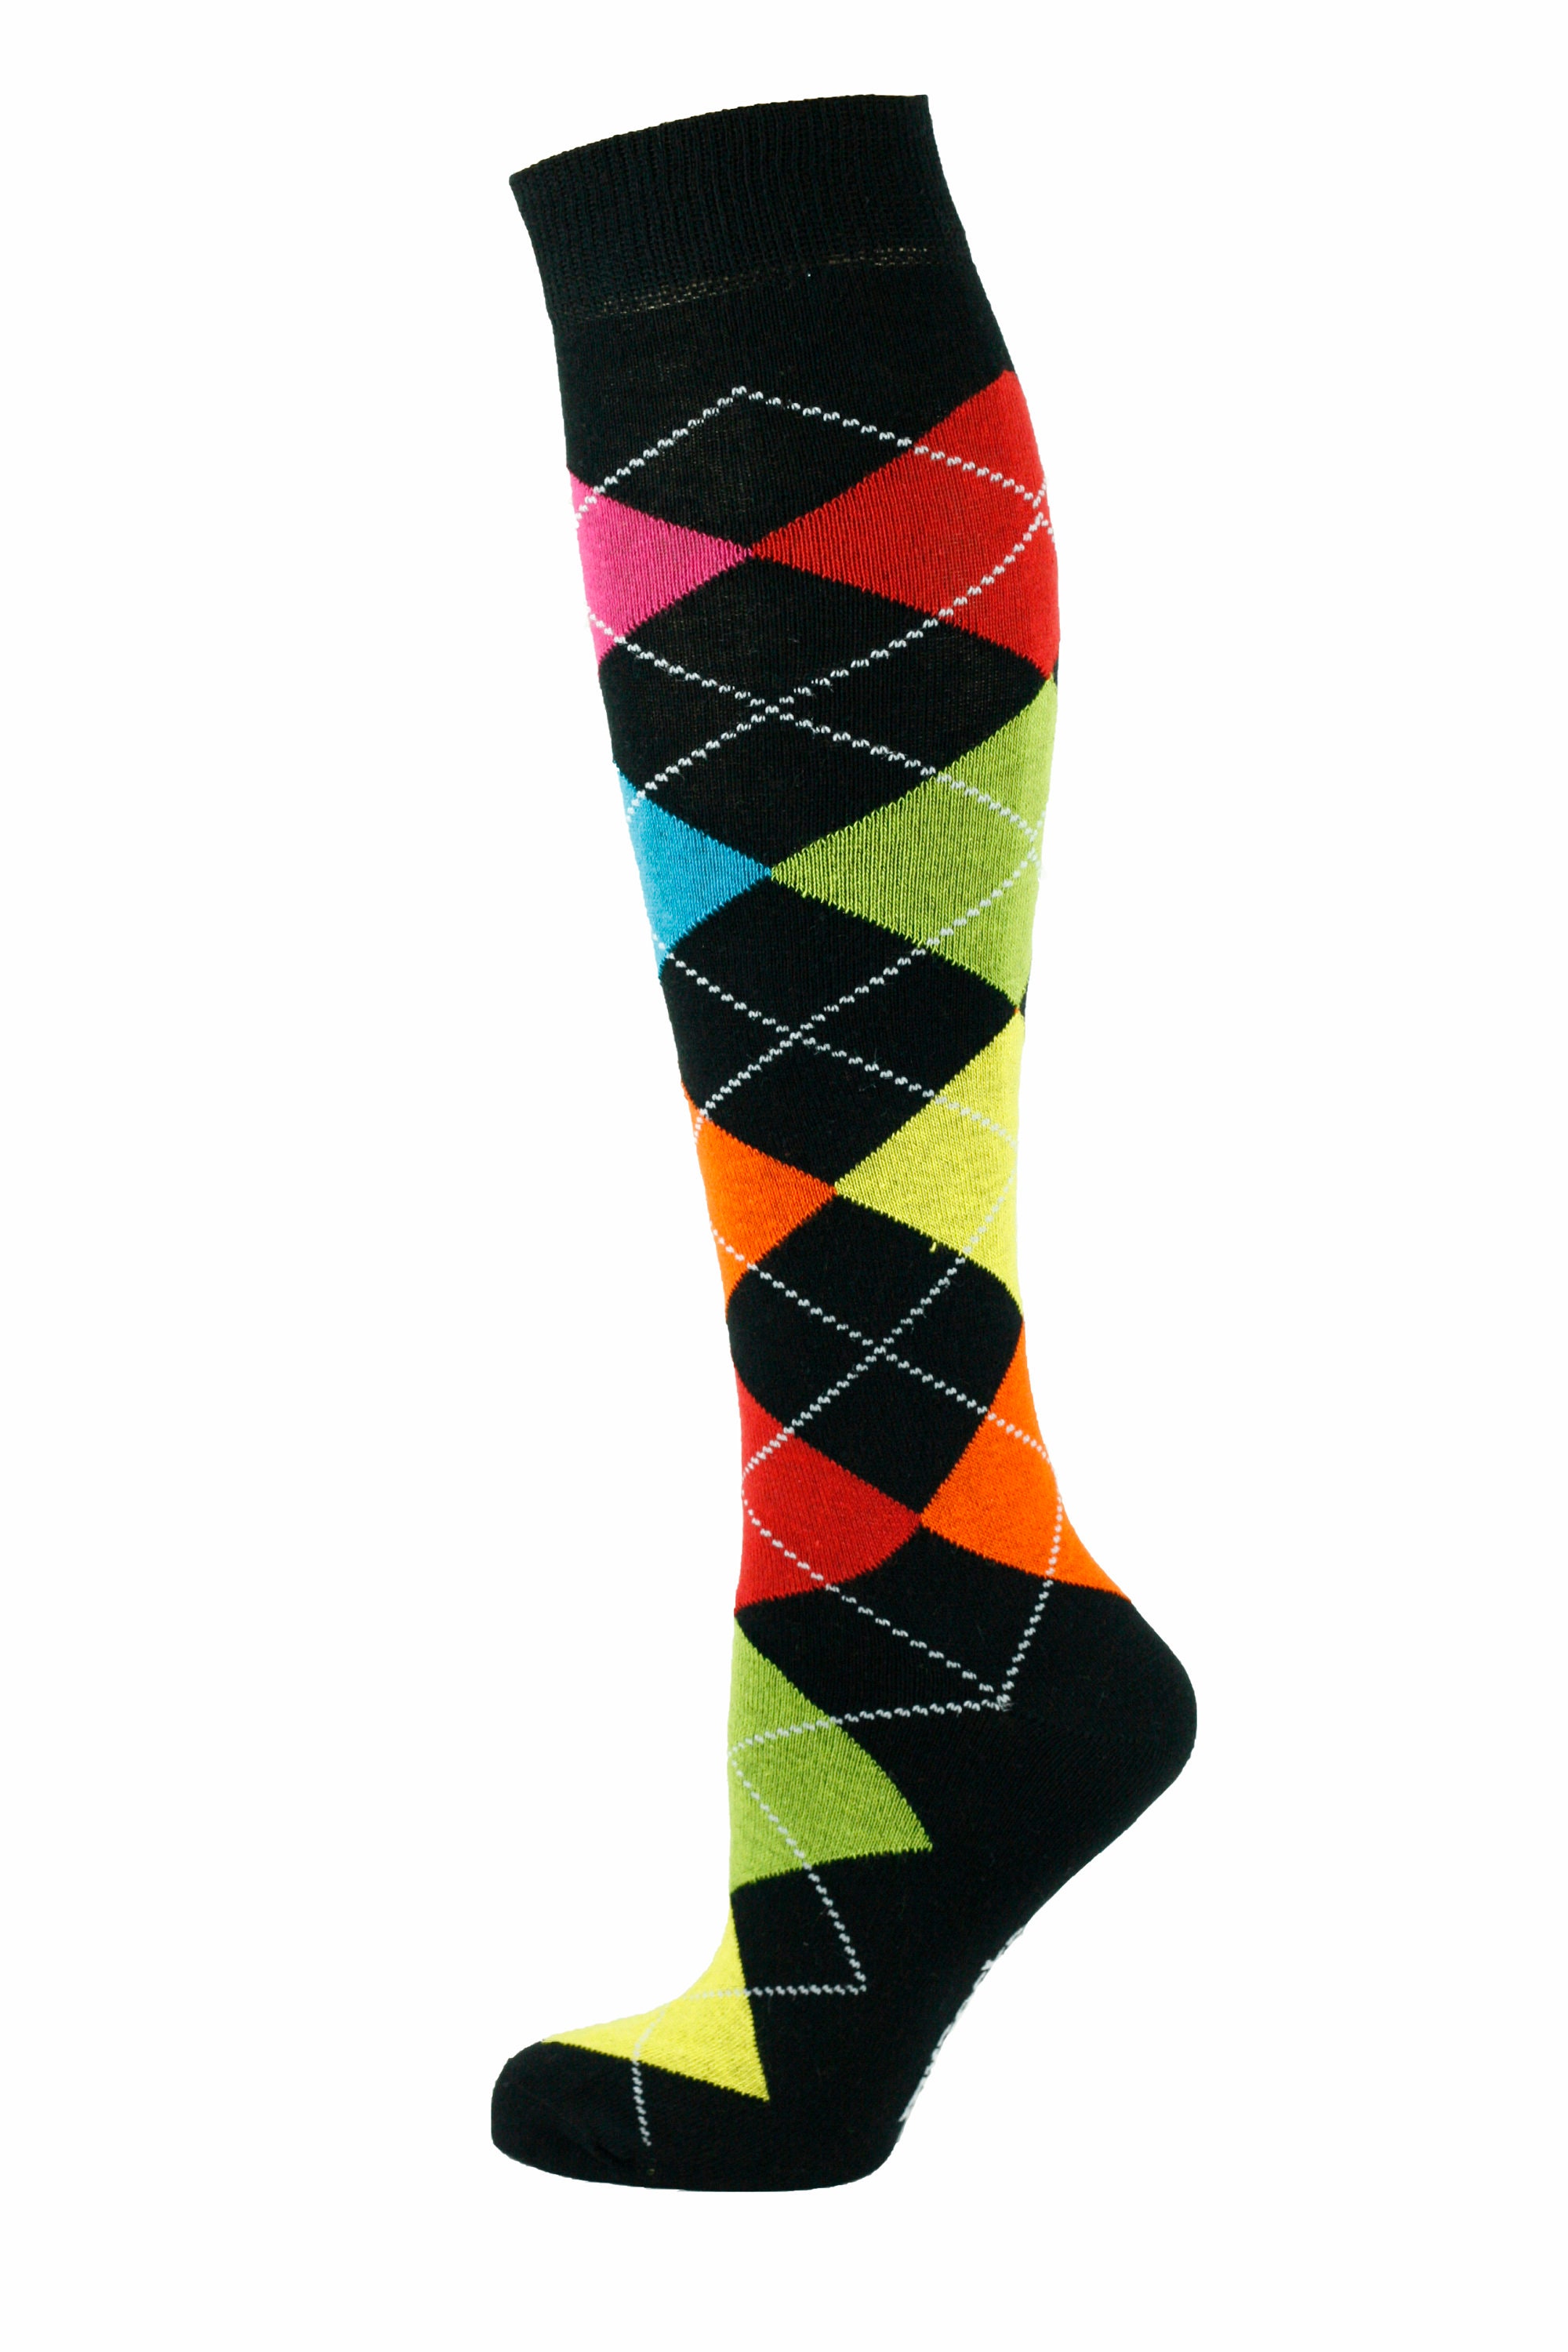 Mysocks 3 Pairs Knee High Socks Dark Rainbow Combination - Etsy UK